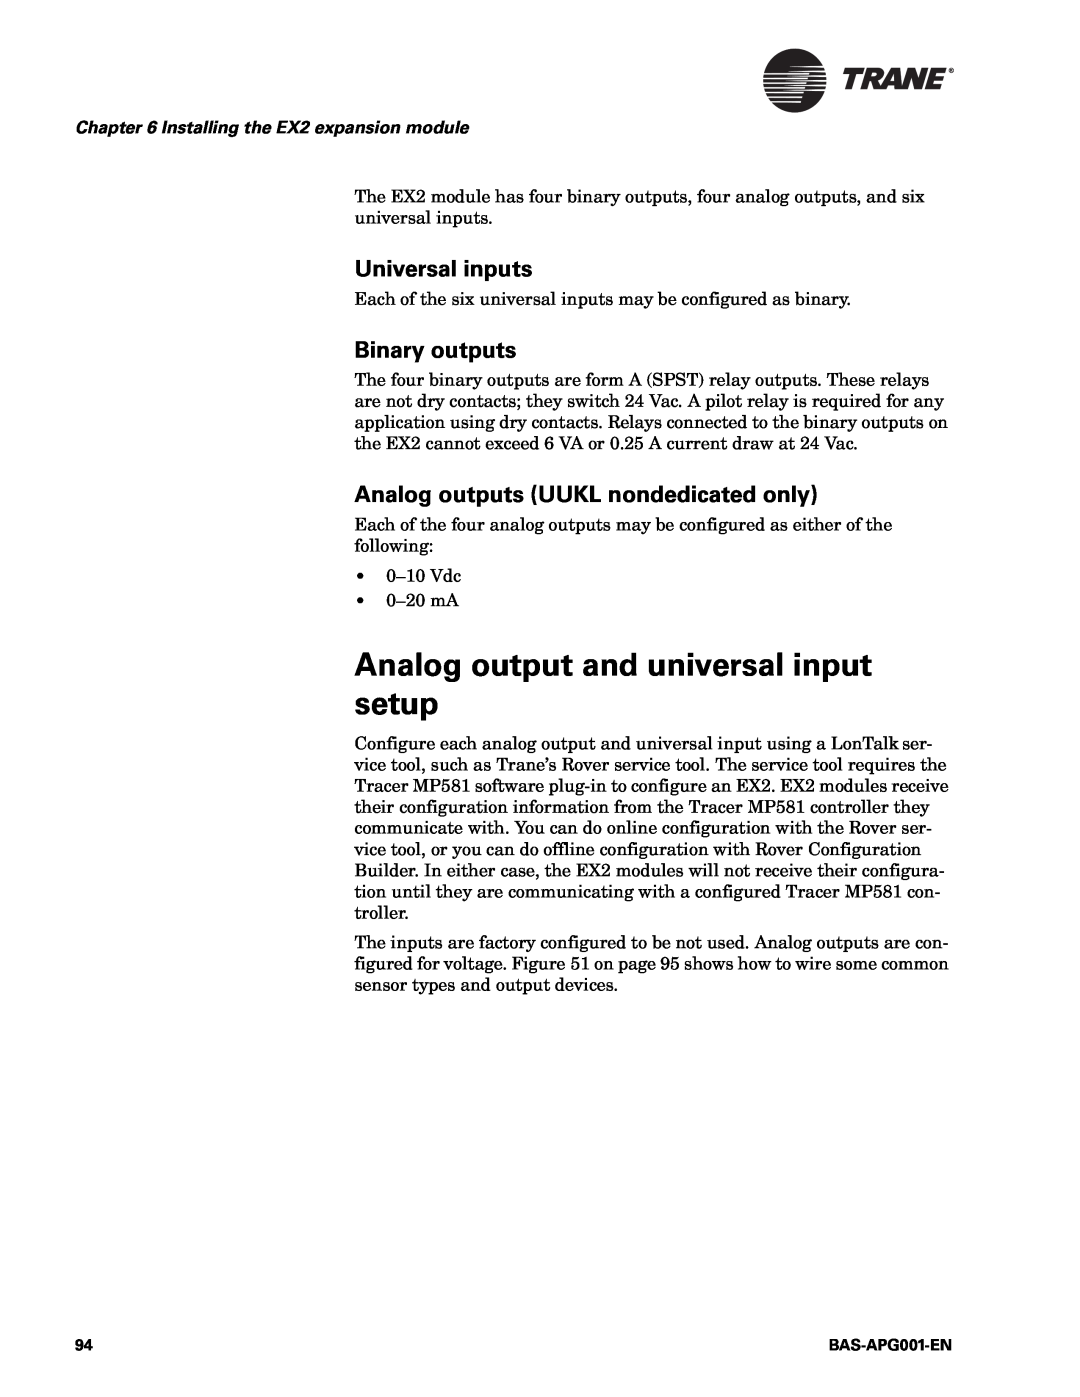 Trane BAS-APG001-EN manual Analog output and universal input setup, Universal inputs, Binary outputs 